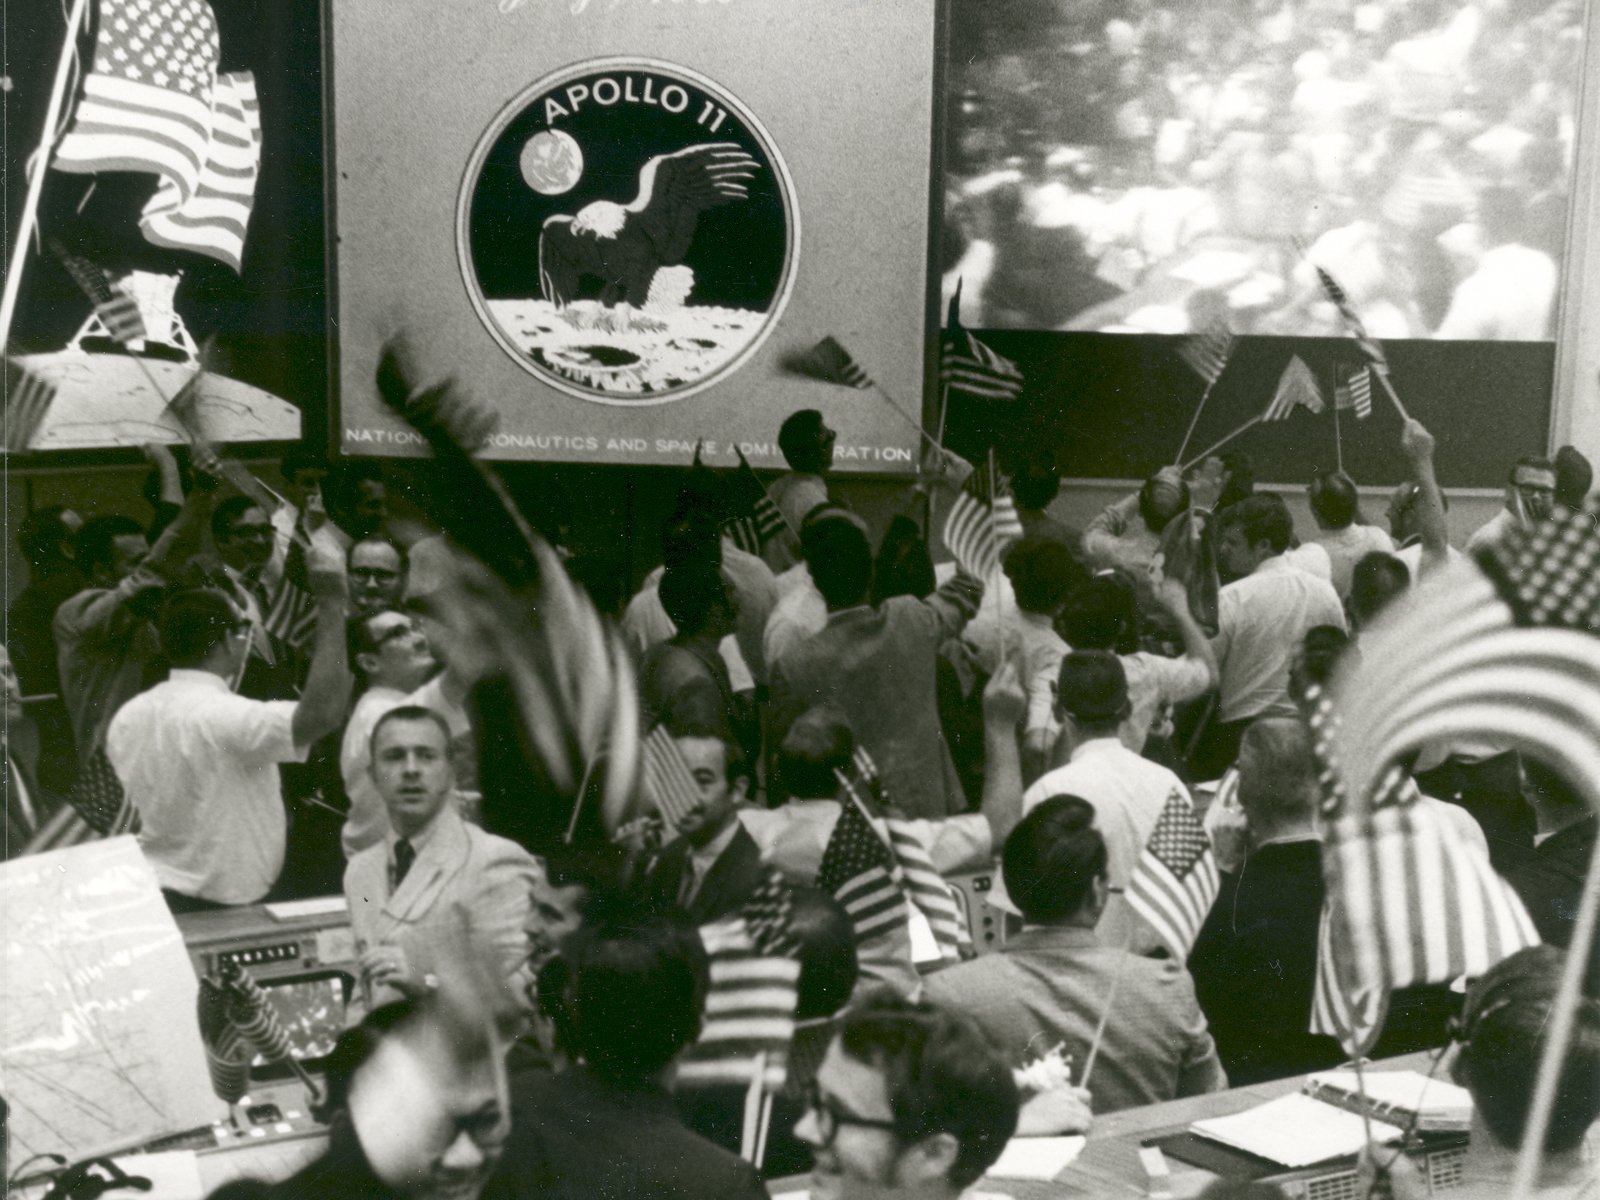 壁纸1600x1200One Giant Leap for Mankind  Mission Control Celebrates After Conclusion of the Apollo 11 Lunar 登月任务结束后的欢庆壁纸 阿波罗11号登月40周年纪念壁纸壁纸 阿波罗11号登月40周年纪念壁纸图片 阿波罗11号登月40周年纪念壁纸素材 人文壁纸 人文图库 人文图片素材桌面壁纸